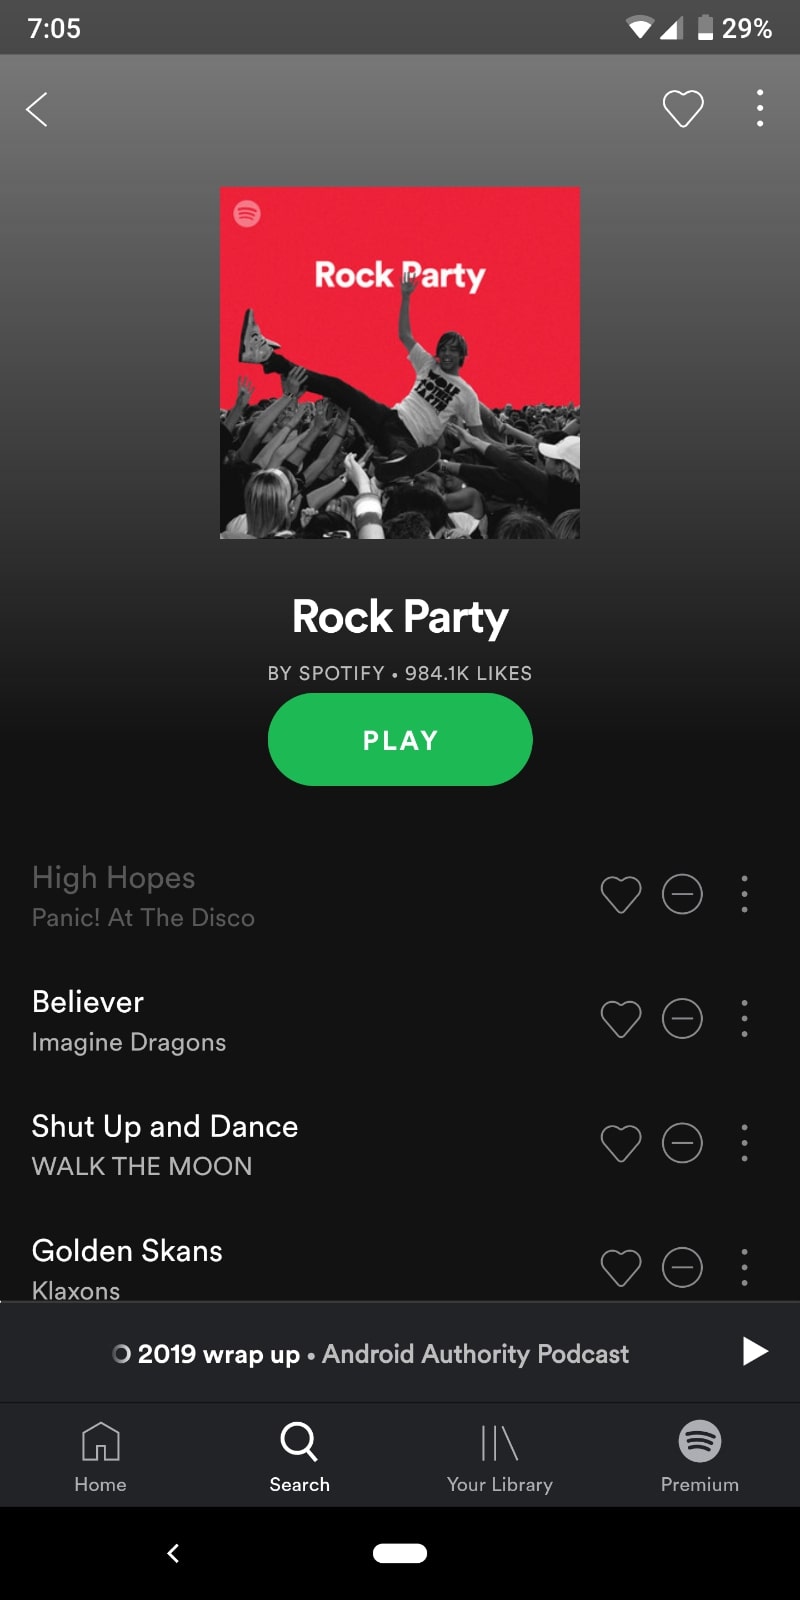 spotify india rock party album